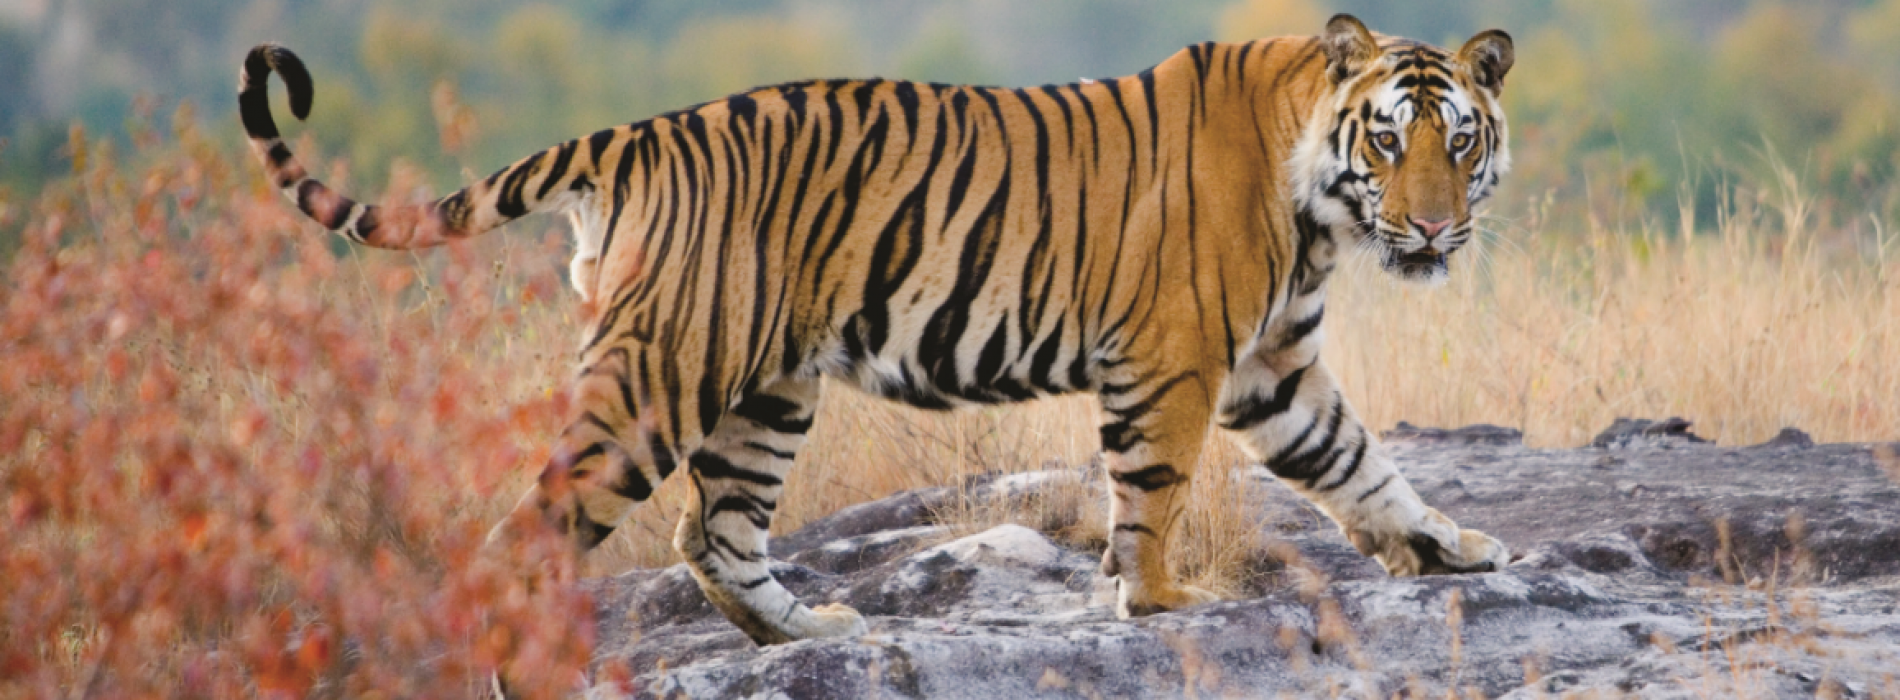 Taj Safaris celebrates The Indian Jungles with Wildlife Escape Offer